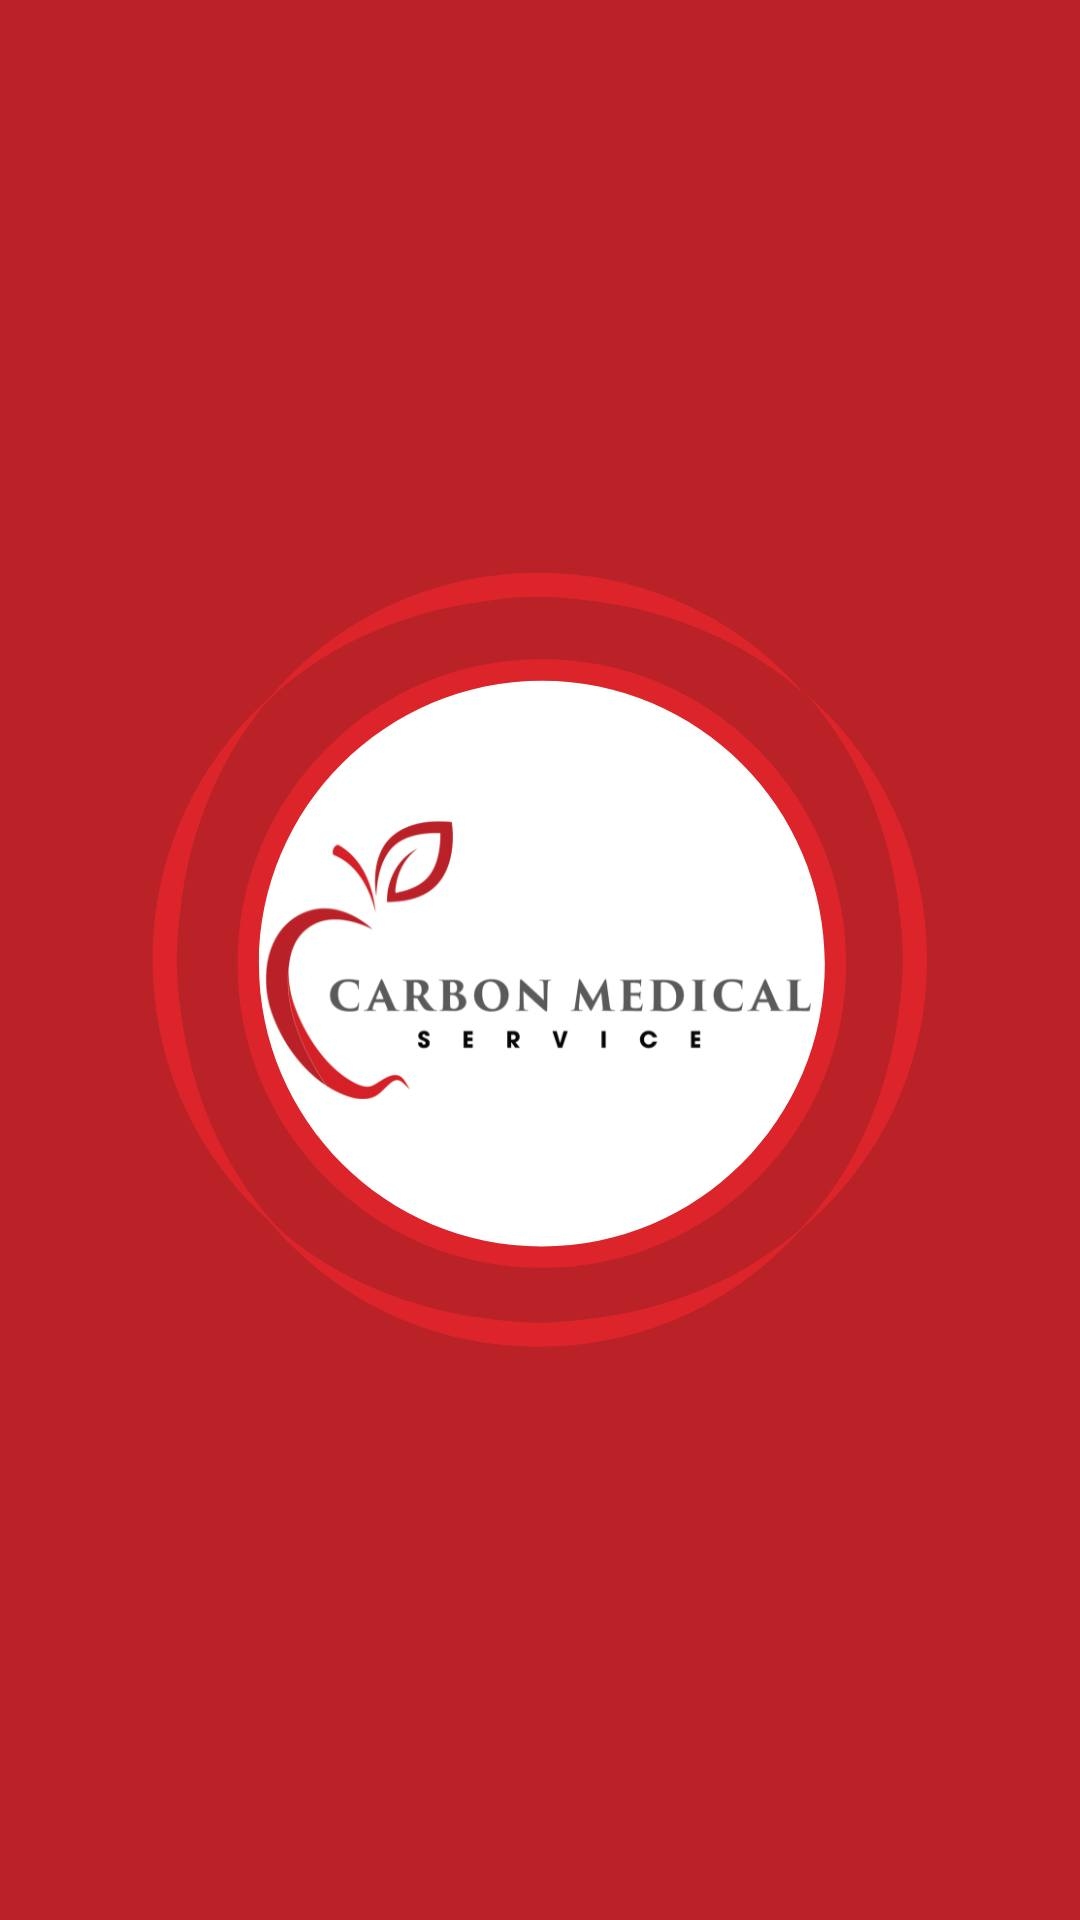 Carbon Medical Service Association